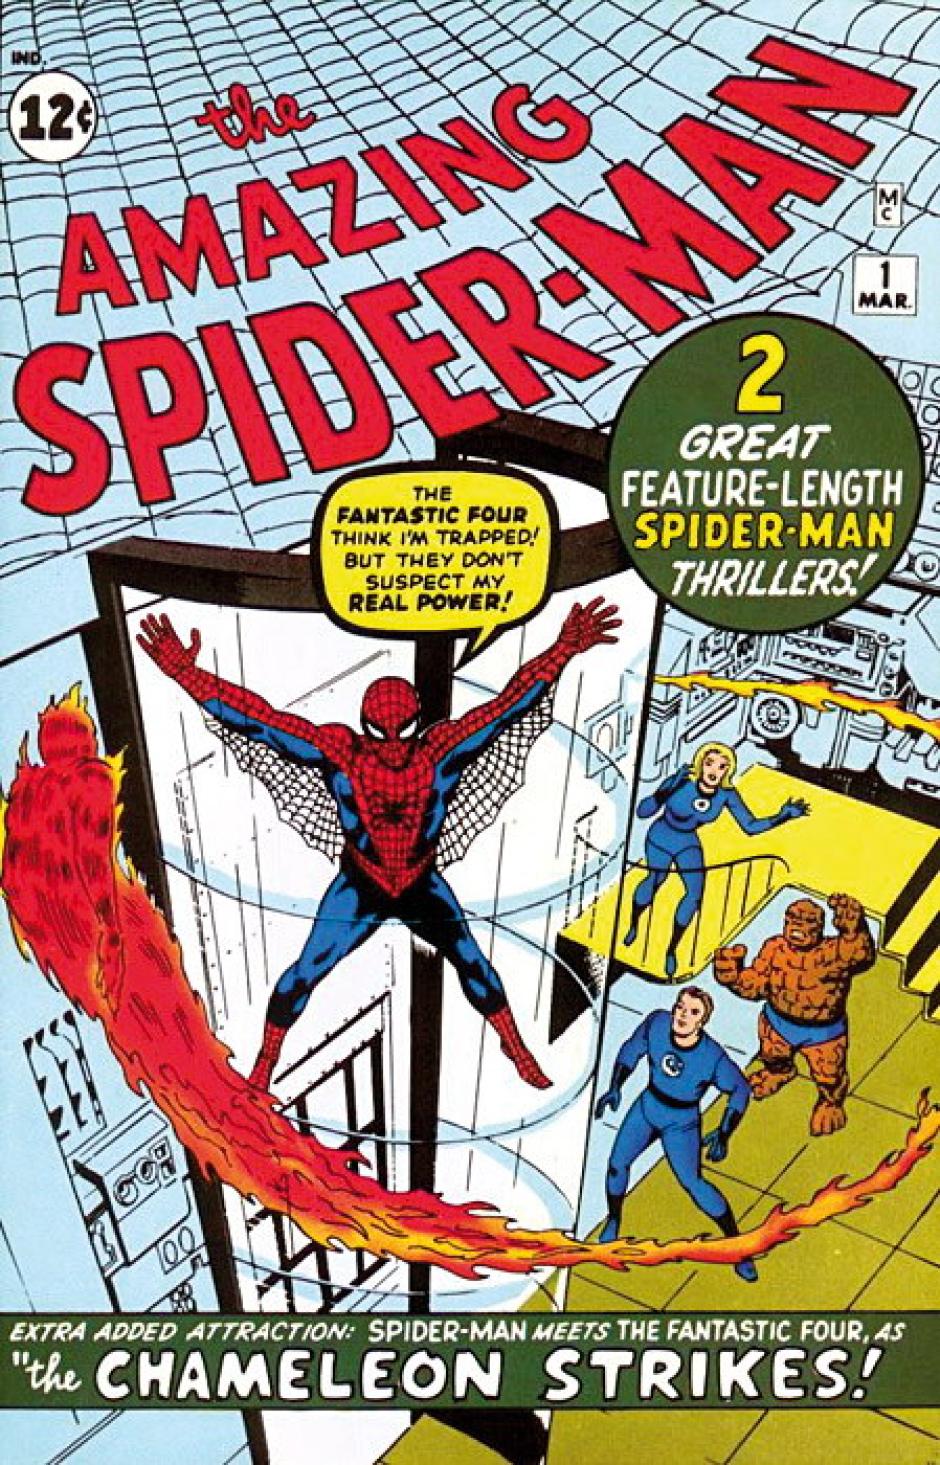 Portada del primer número de los cómics de Spiderman